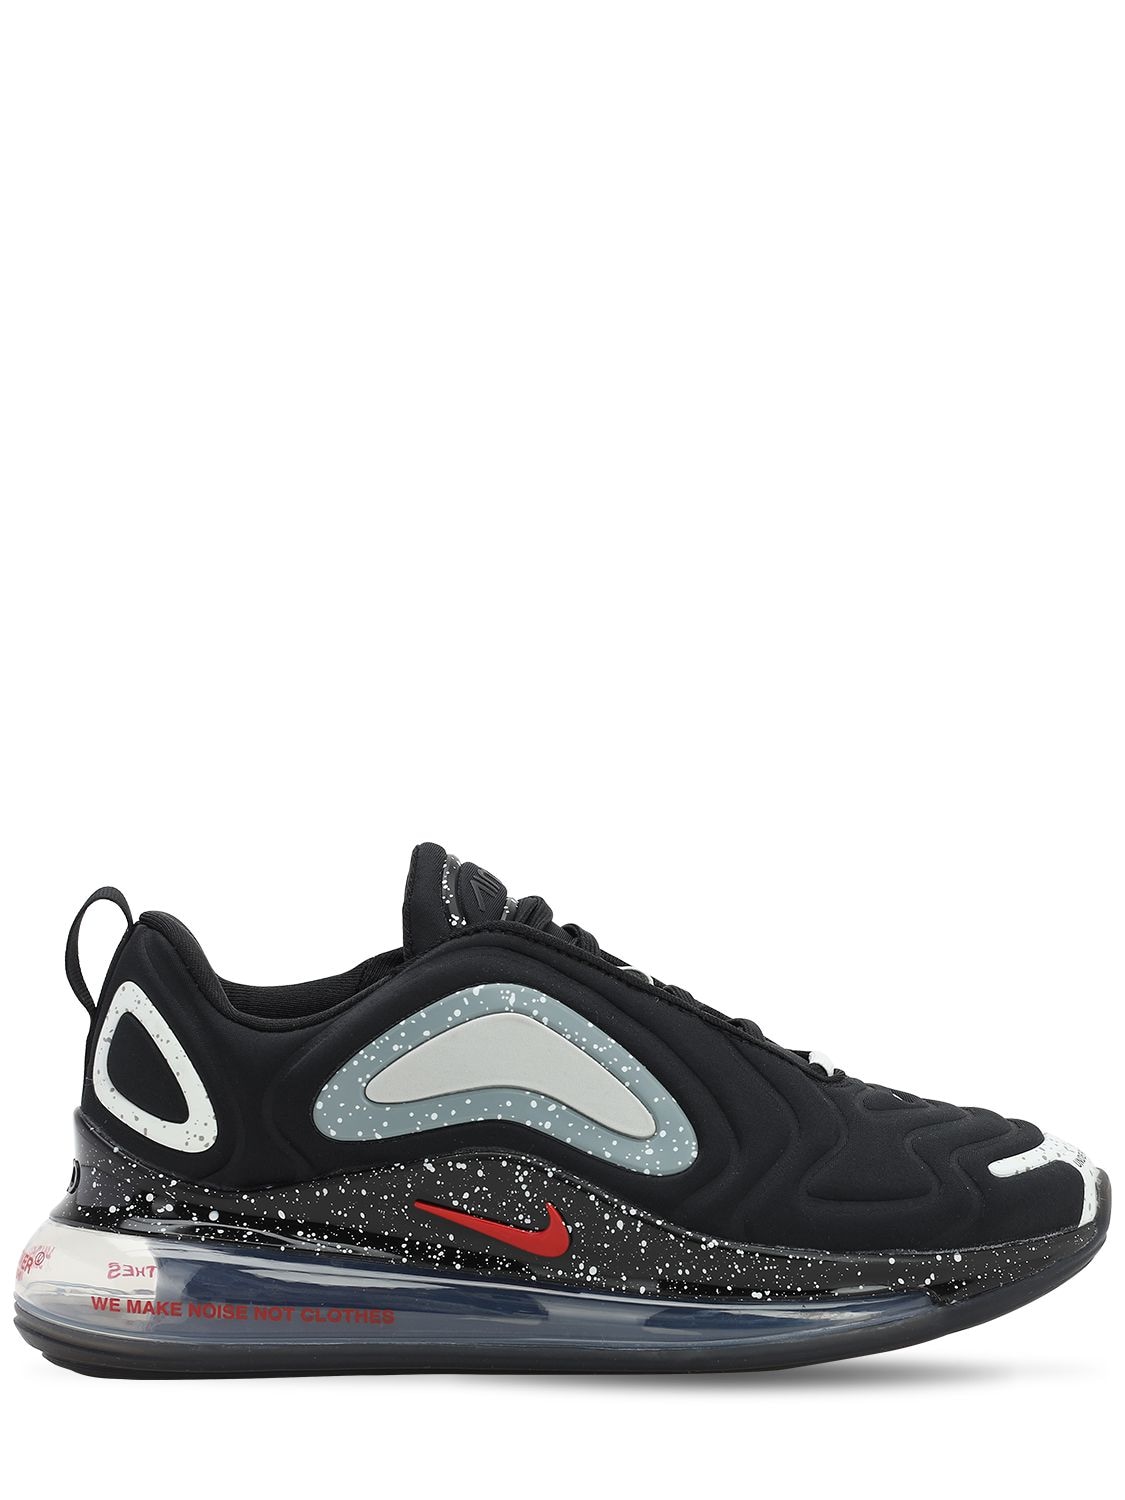 Nike Air Max 720 Undercover Sneakers In Black